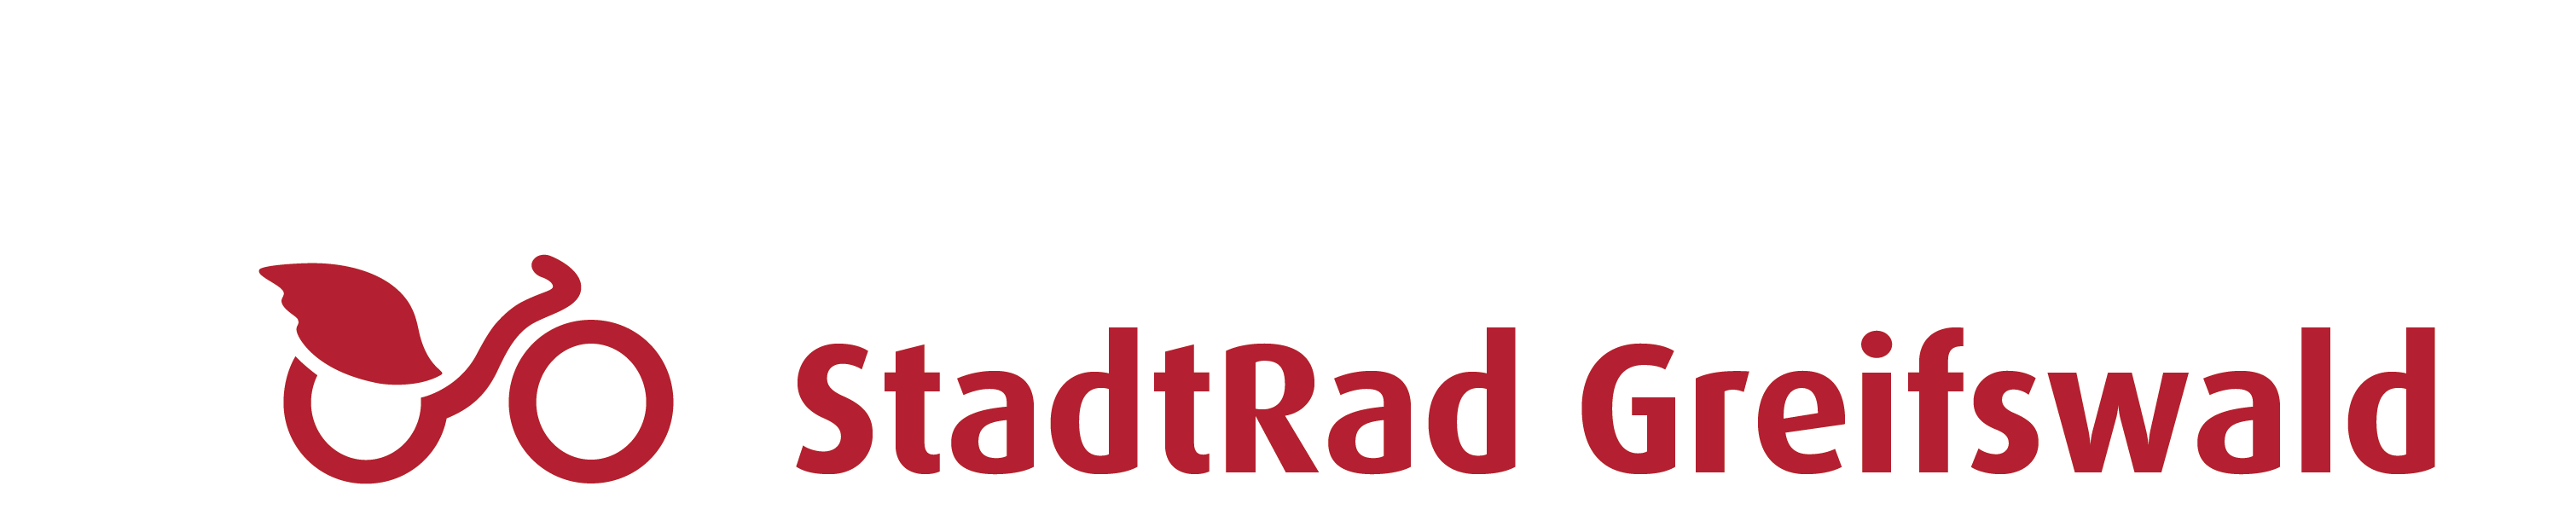 Logo StadtRad Greifswald weiss